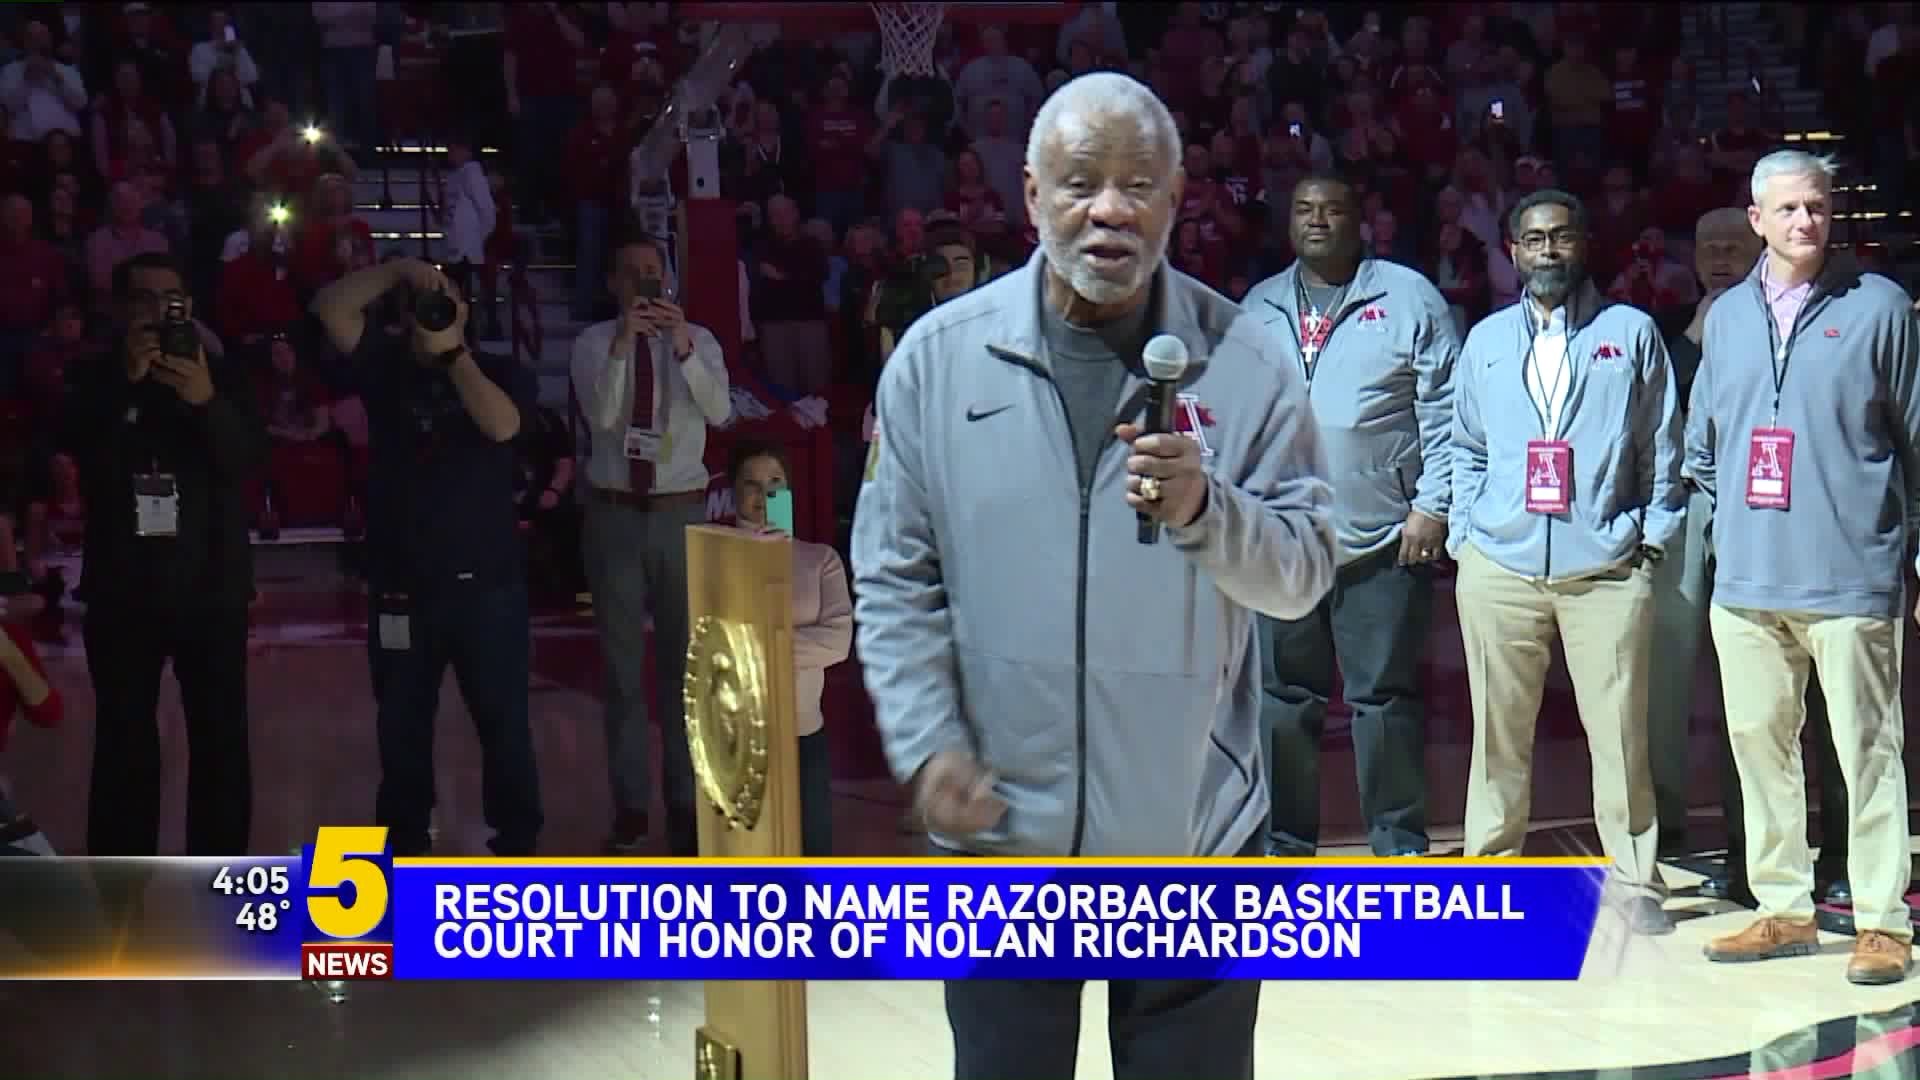 Resolution To Name Razorback Basketball Court In Honor Of Nolan Richardson